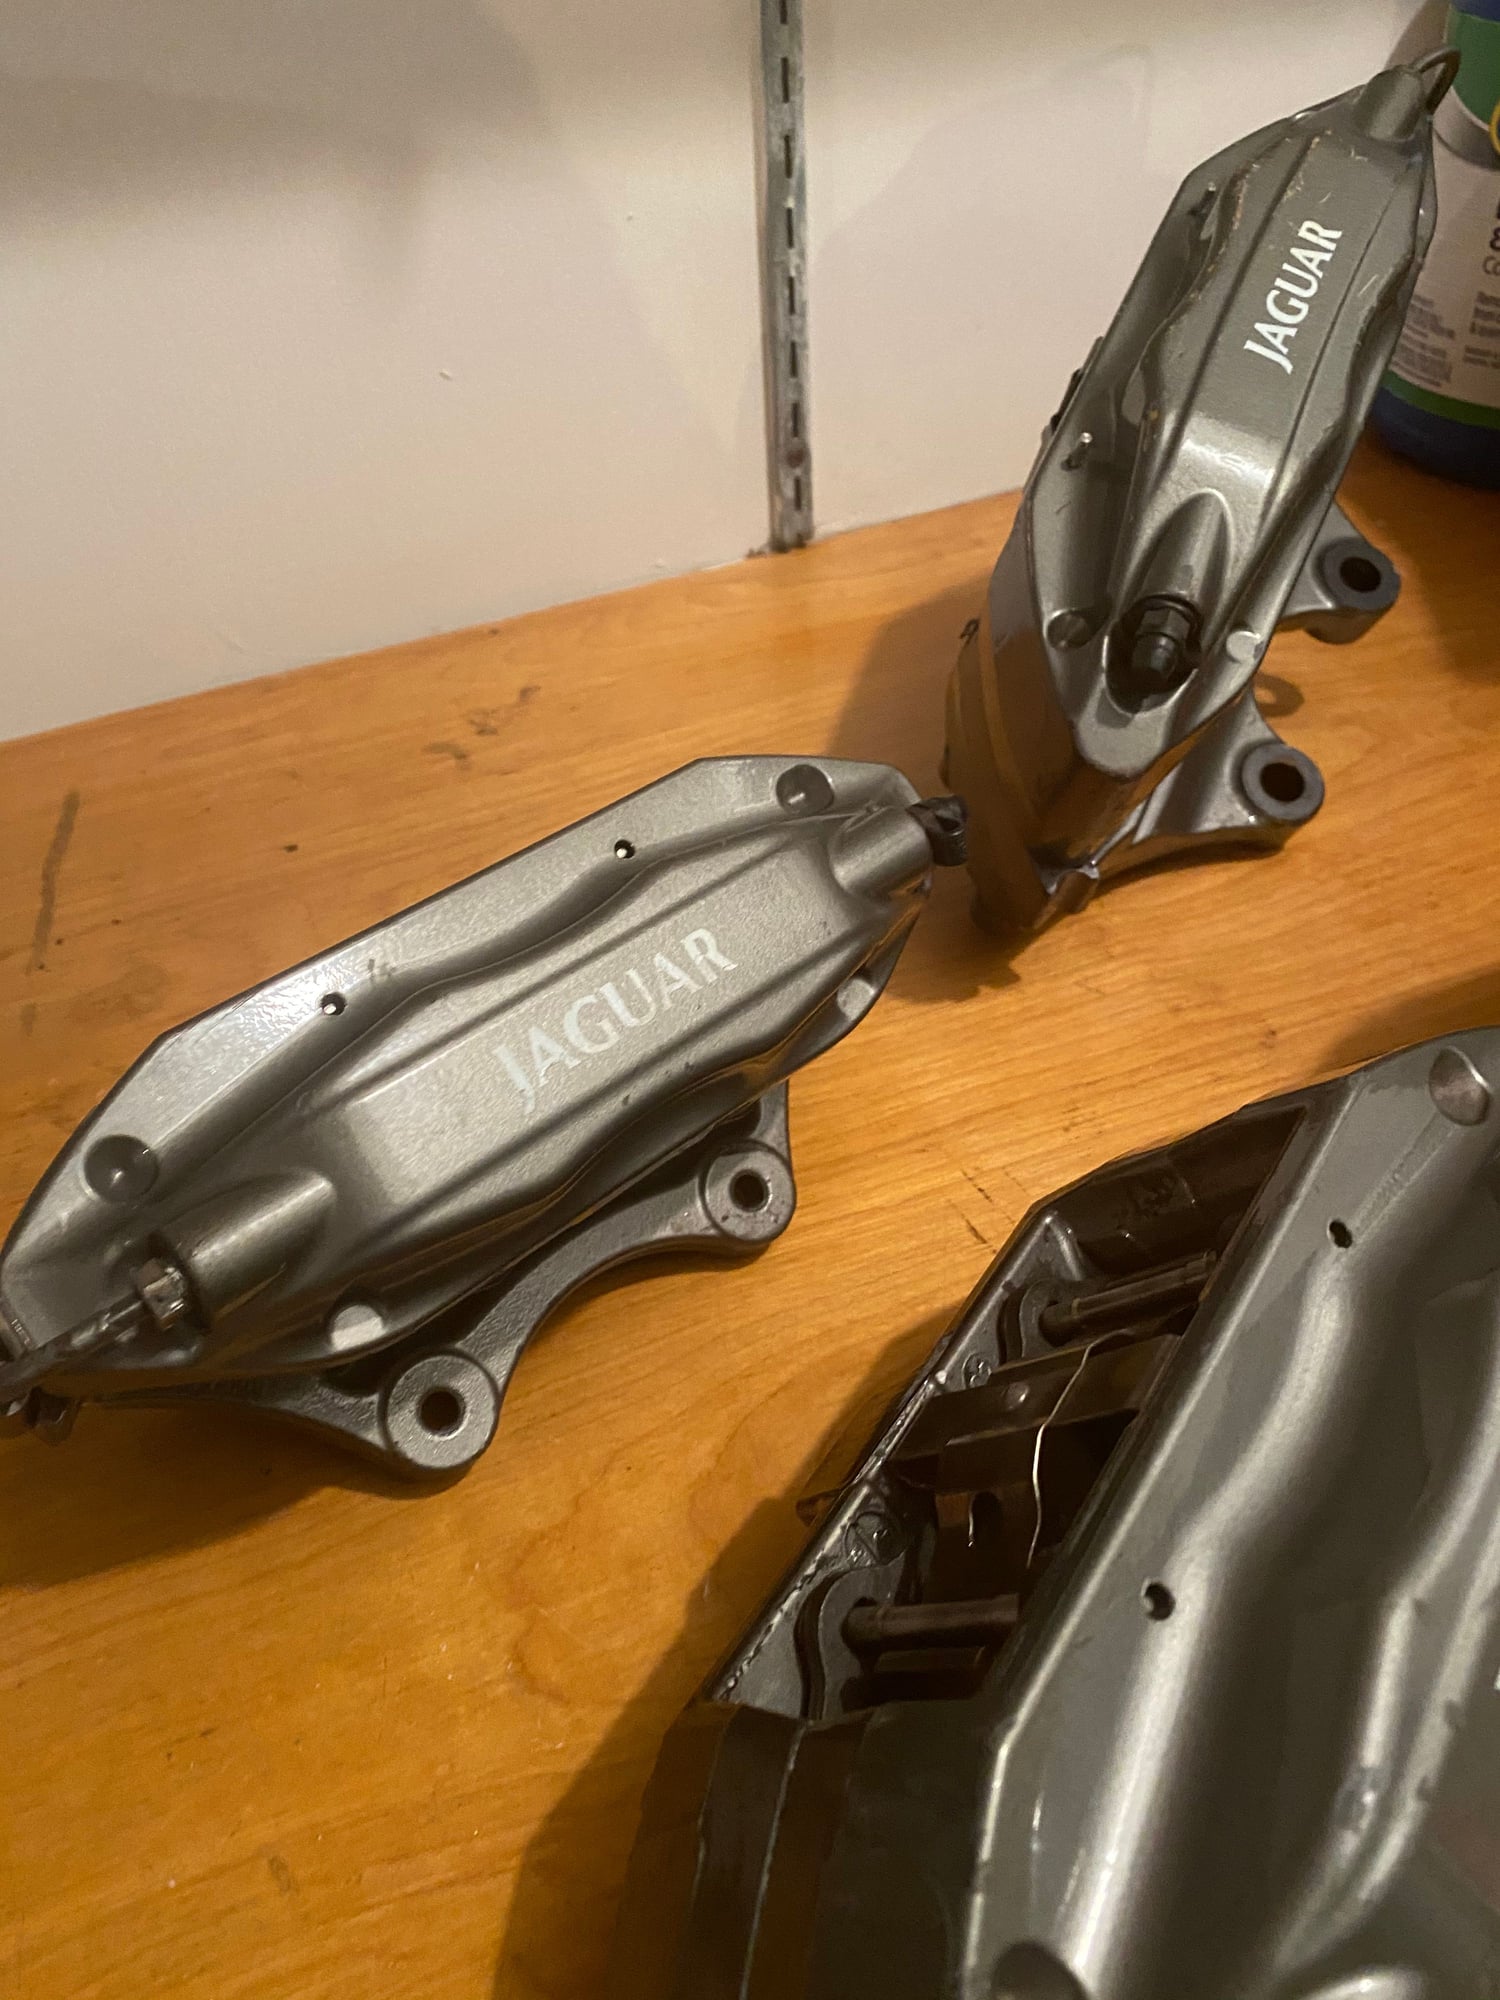 Brakes - X308 R1 brake caliper set - Used - 1998 to 2003 Jaguar XJR - Lake Geneva, WI 53191, United States